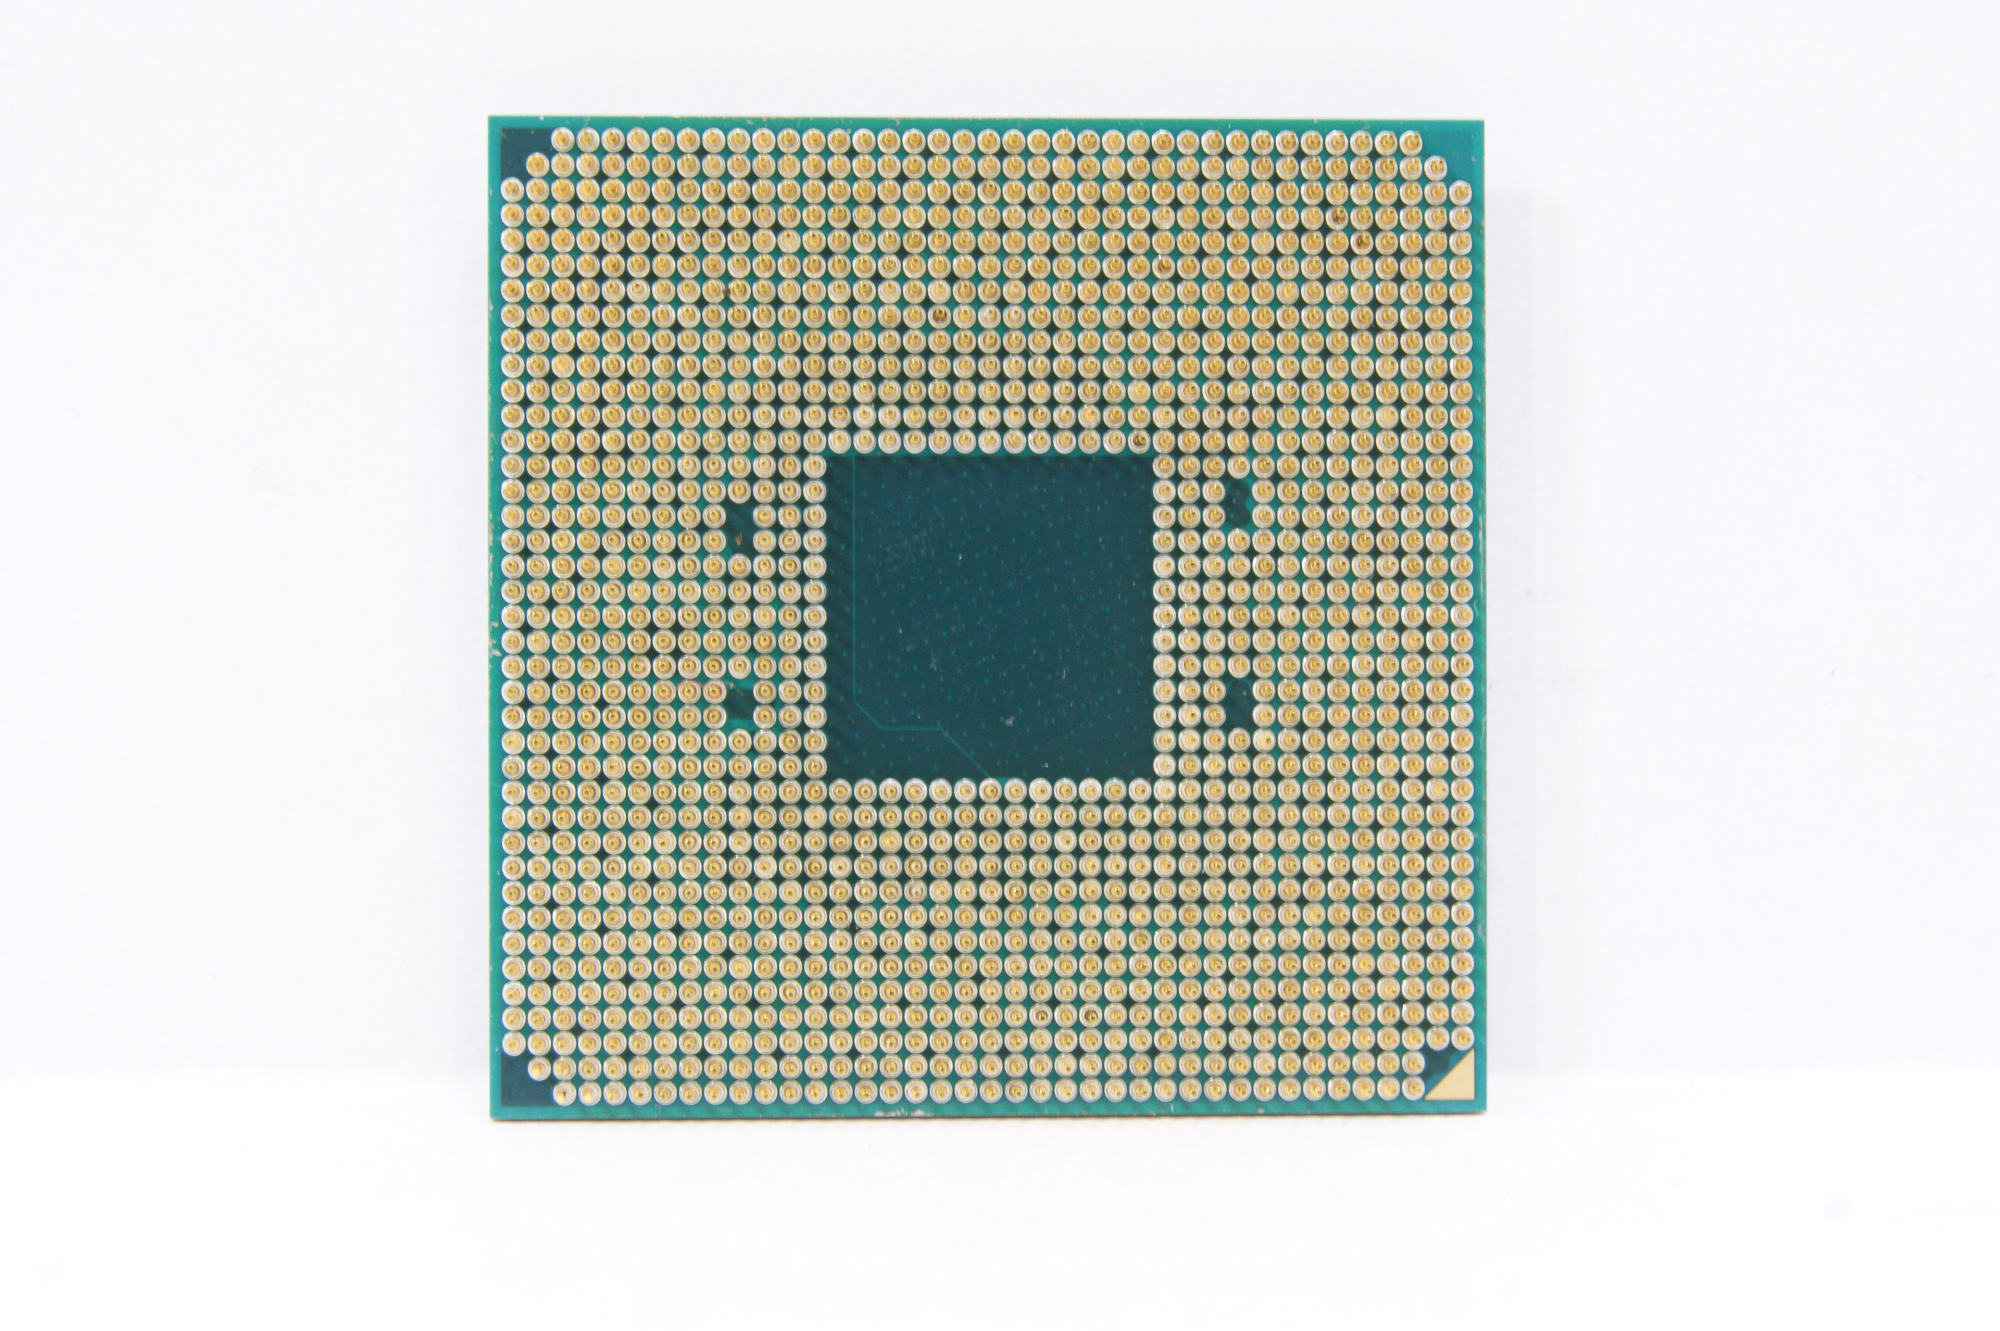 Игры для процессора амд. Процессор AMD Ryzen 5 2400g. Am4 сокет. AMD am4 процессоры. Процессор AMD Ryzen 5 Pro 2400g.